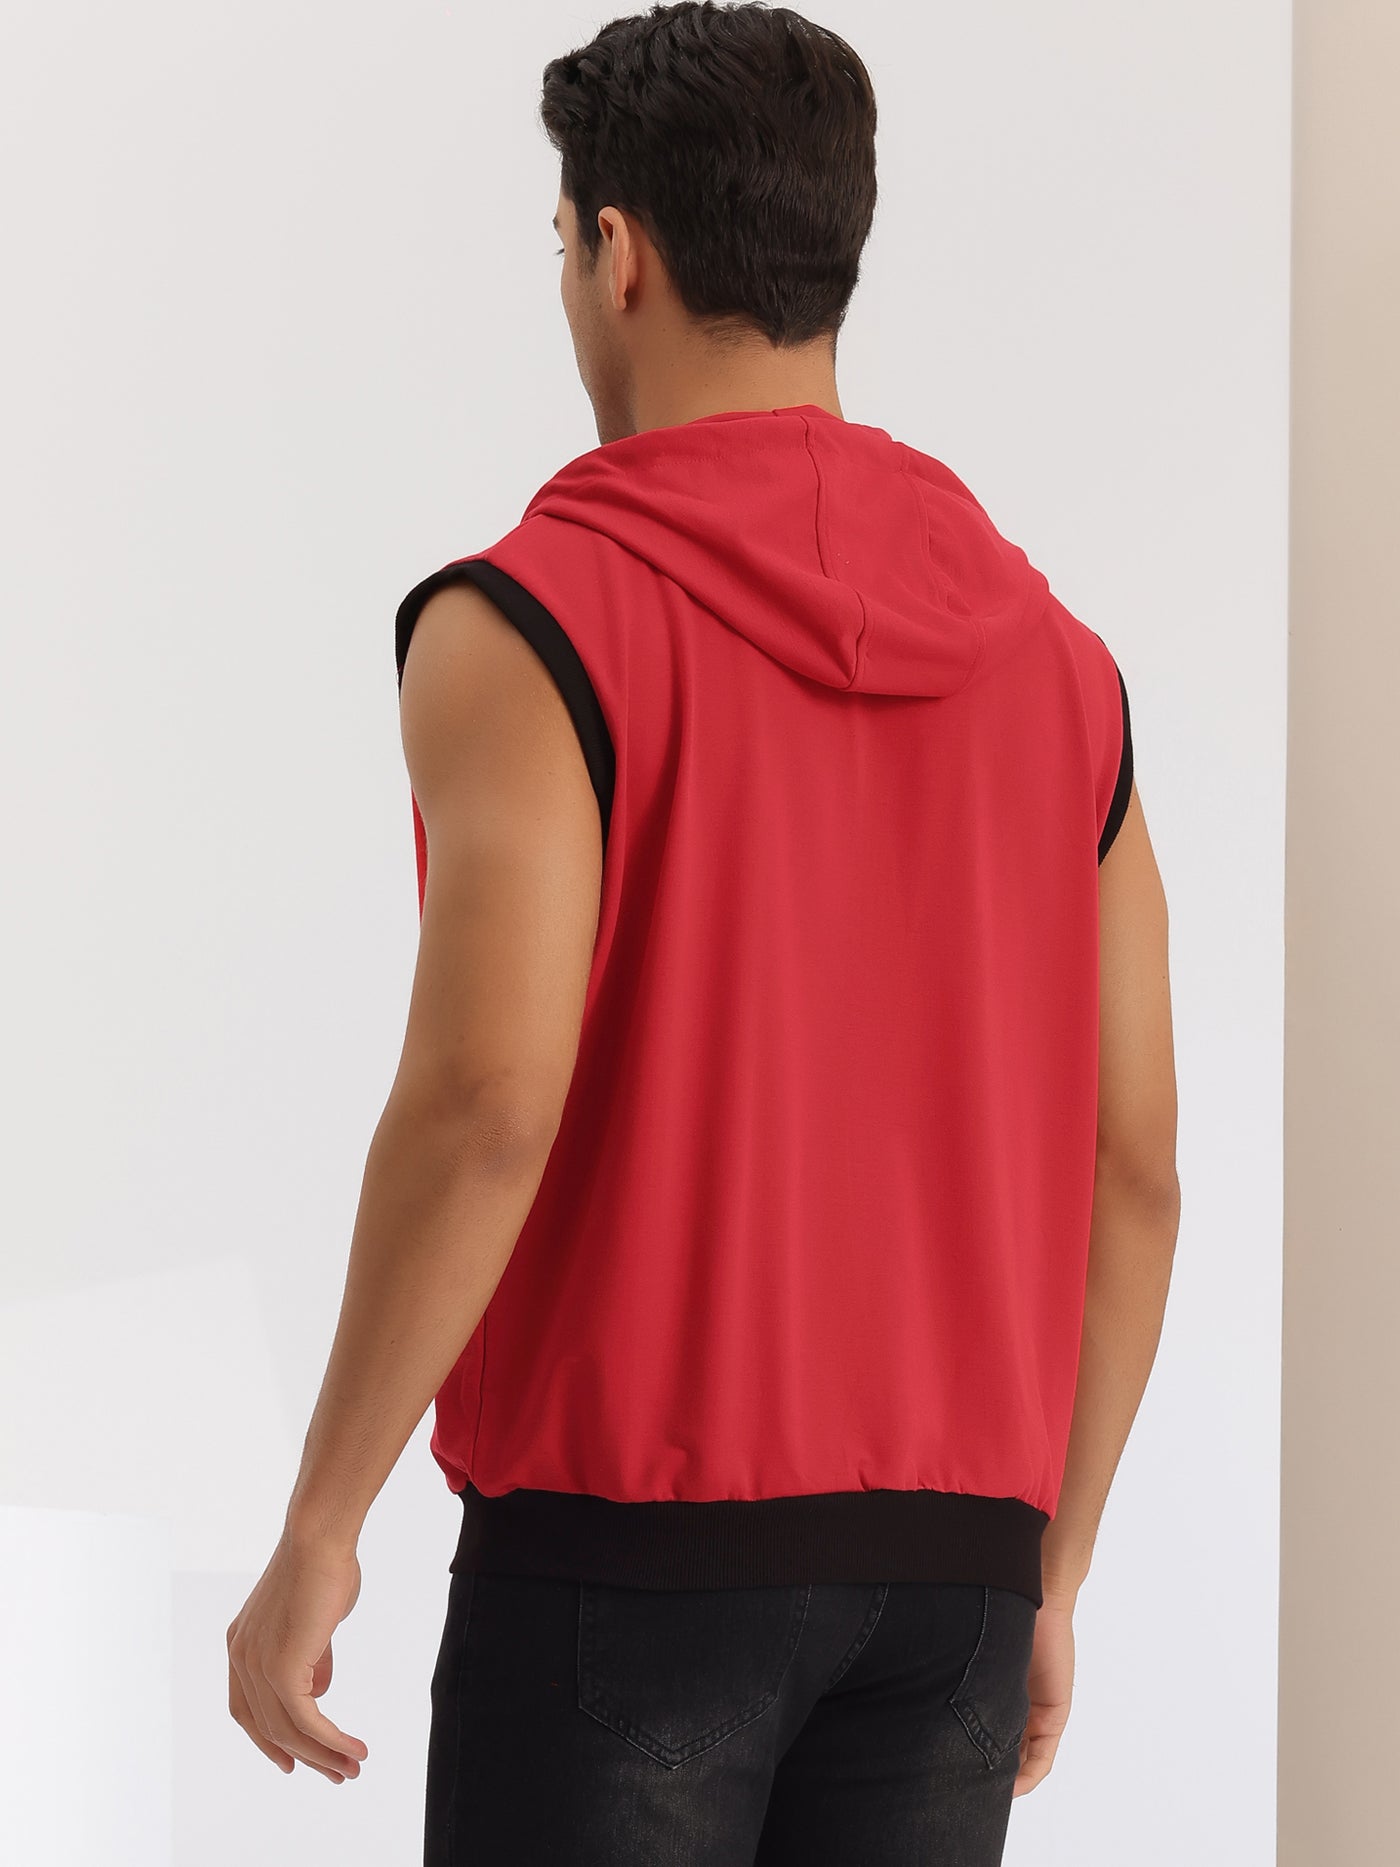 Bublédon Hoodie Vest for Men's Zip Up Sleeveless Drawstring Hooded Sweatshirt